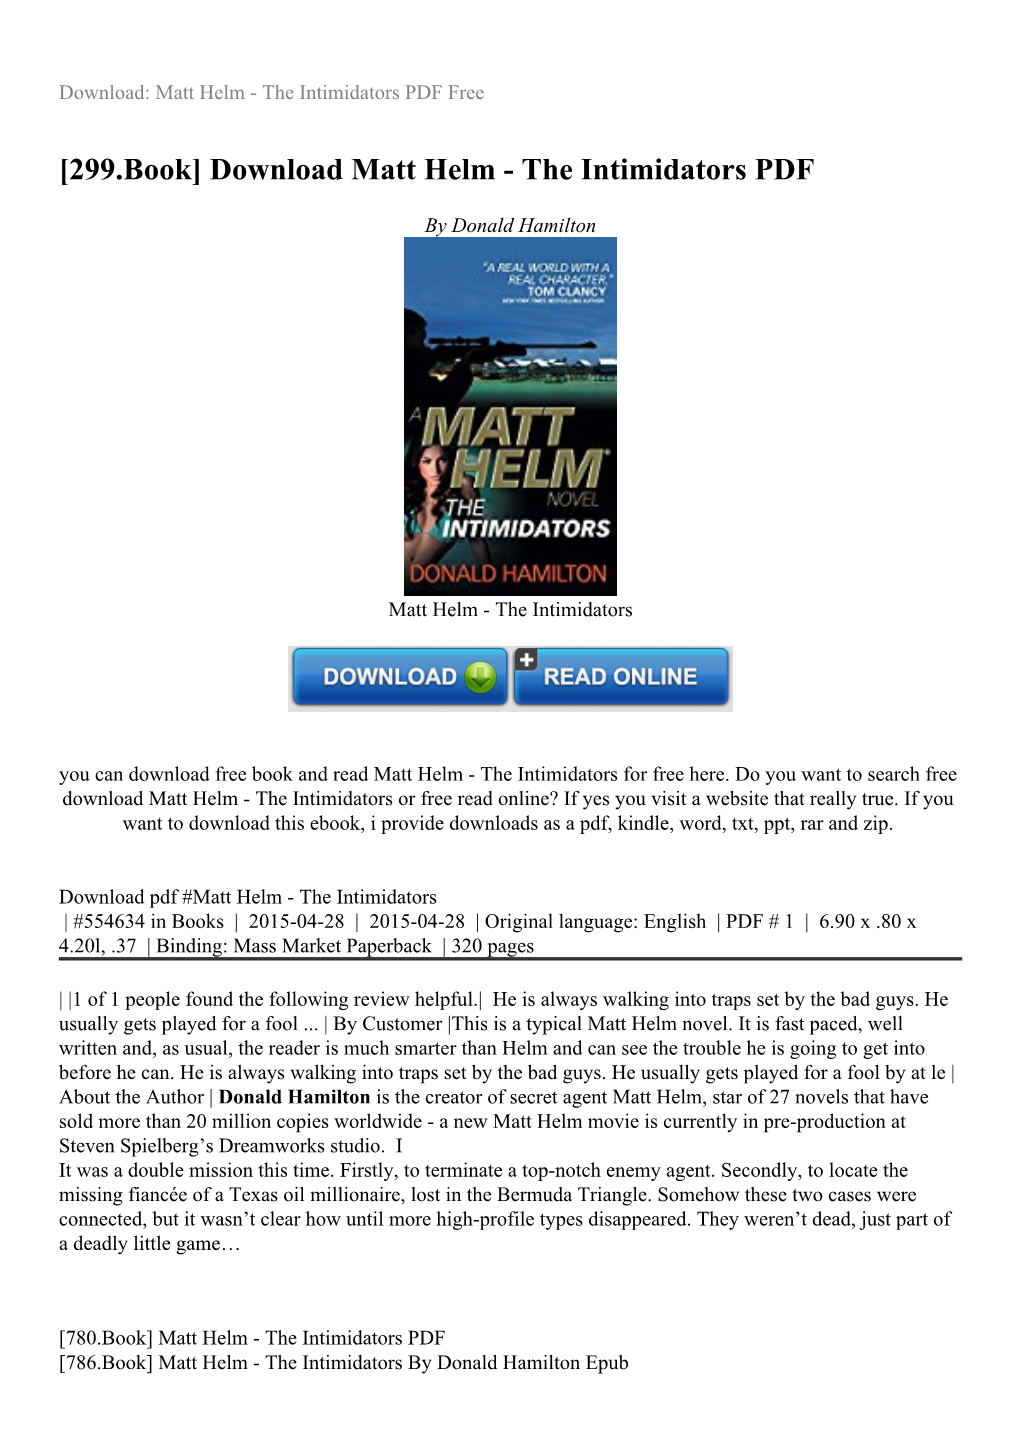 Download Matt Helm - the Intimidators PDF